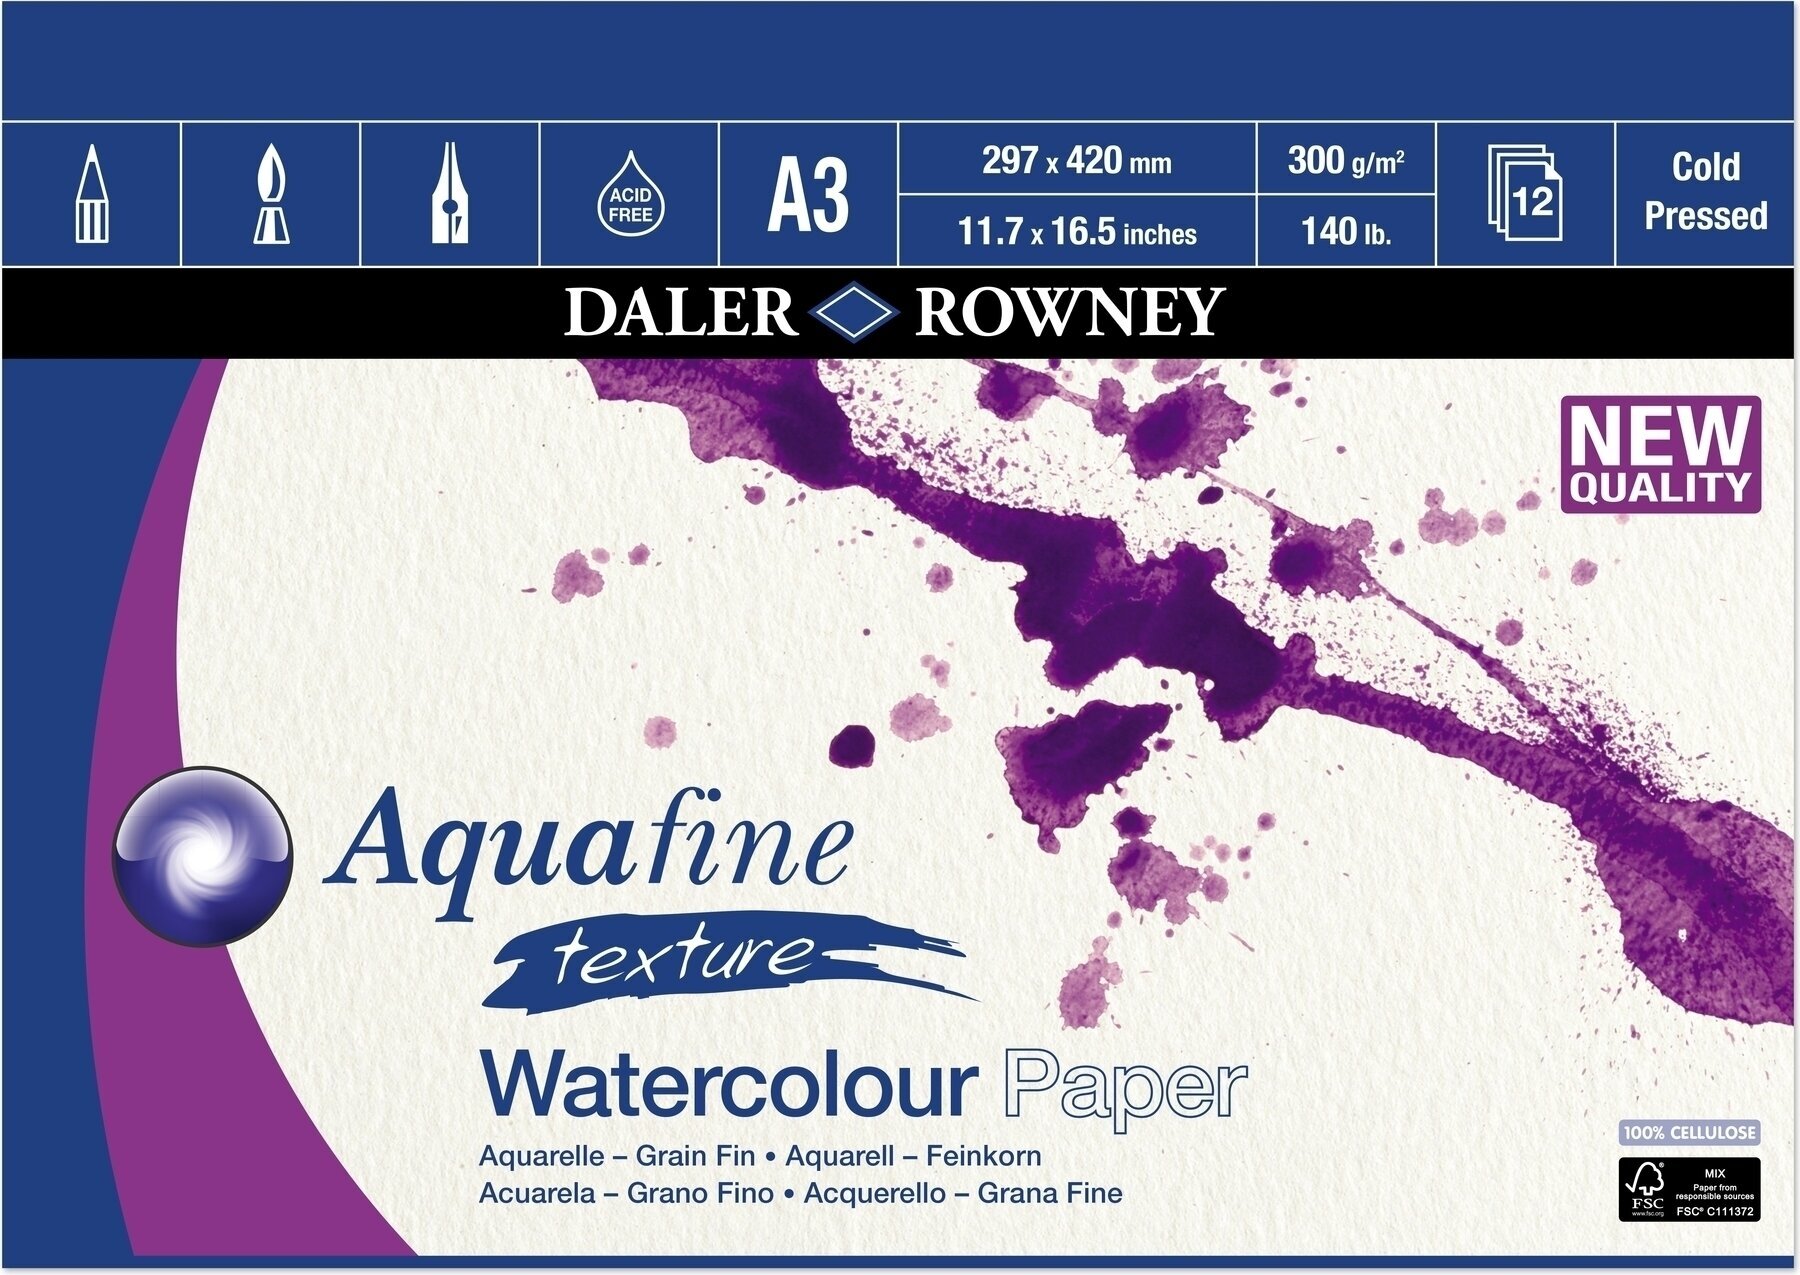 Sketchbook Daler Rowney Aquafine Texture Watercolour Paper Aquafine A3 300 g Sketchbook